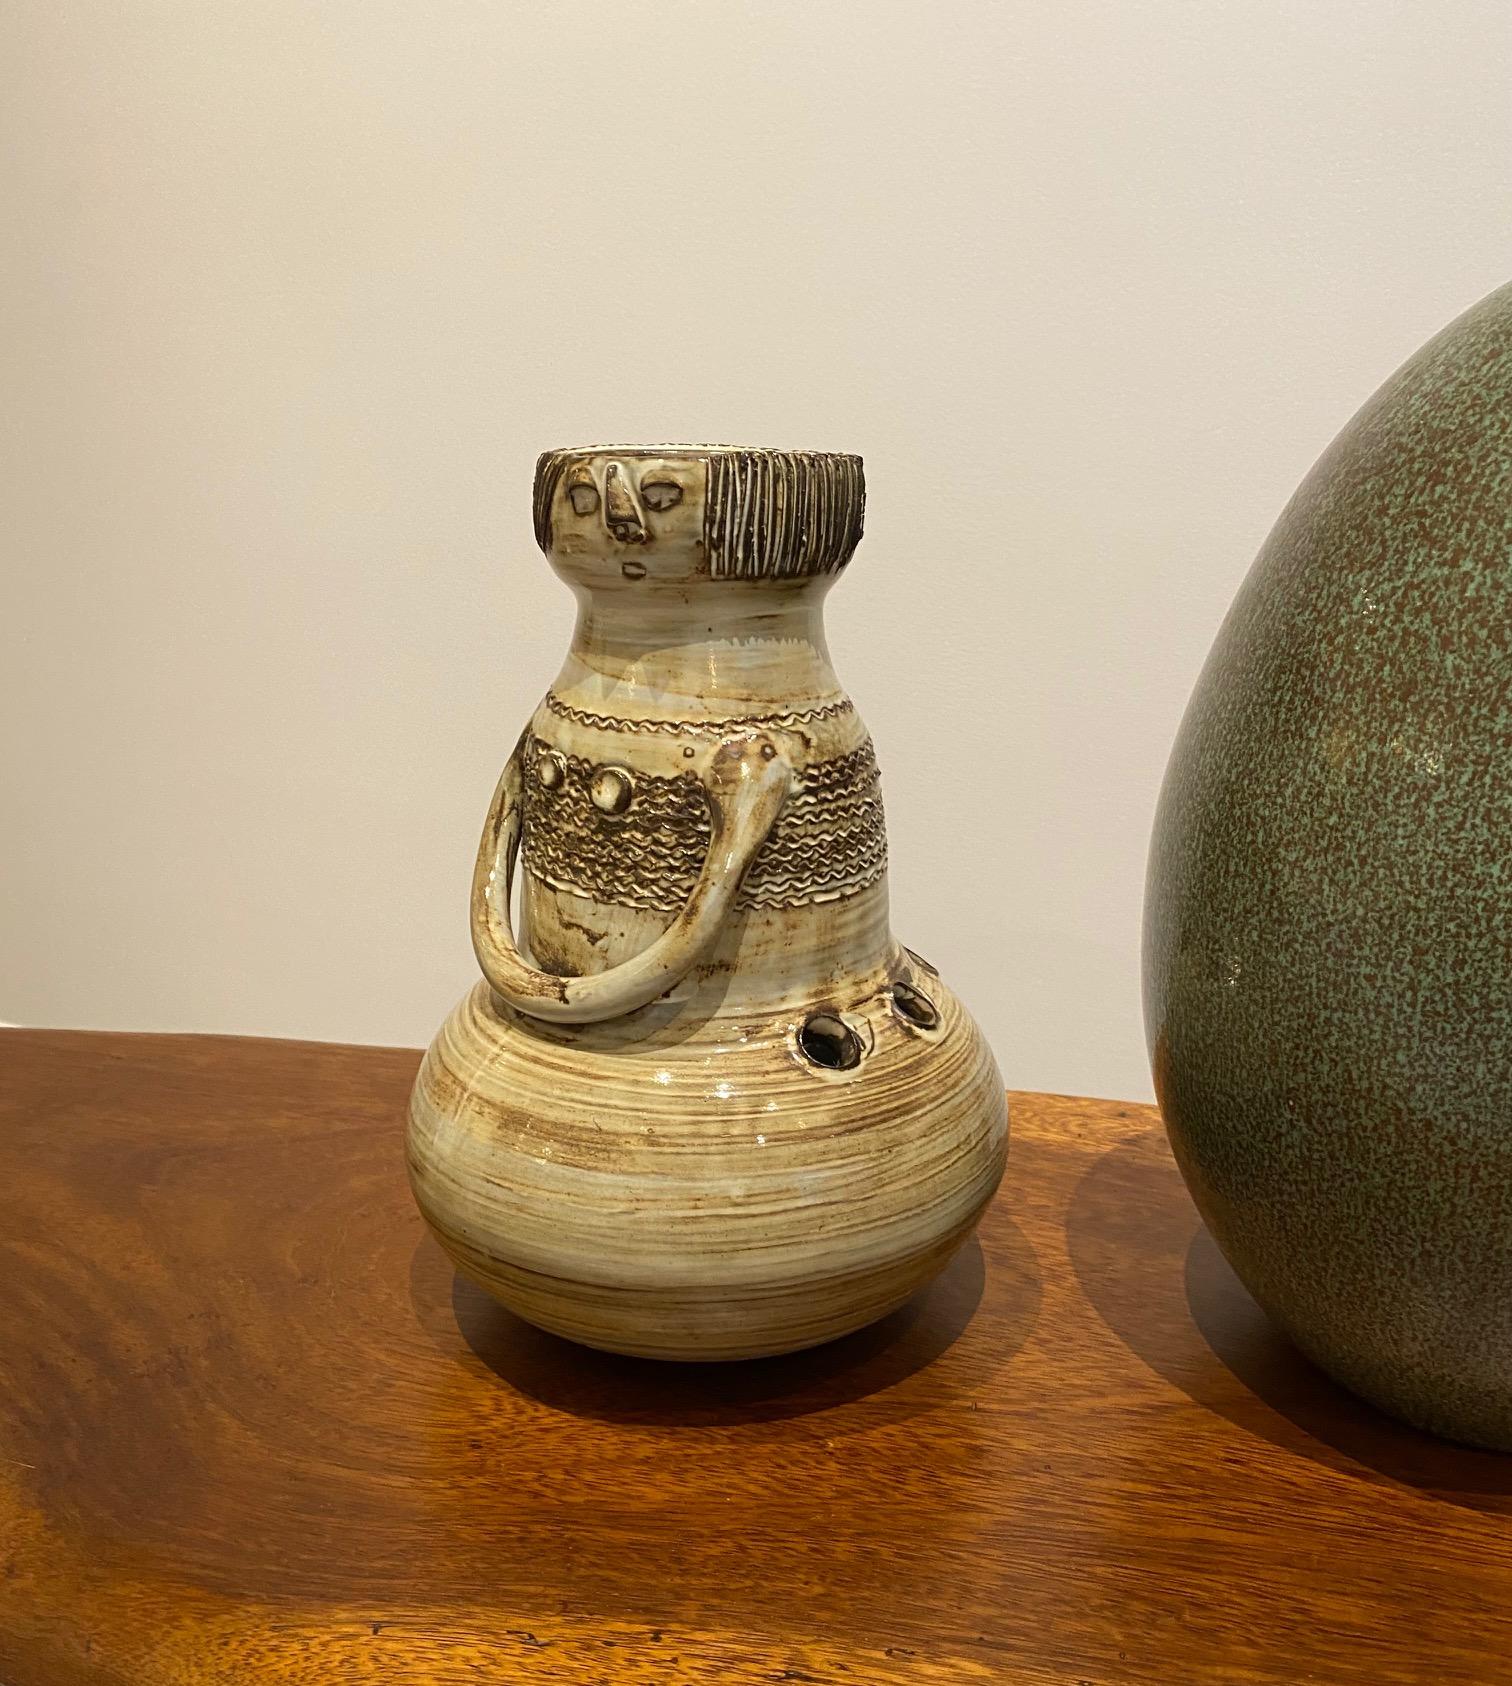 Jacques Pouchain (1927-2015) French painter and ceramicist
Ceramic figure vase 